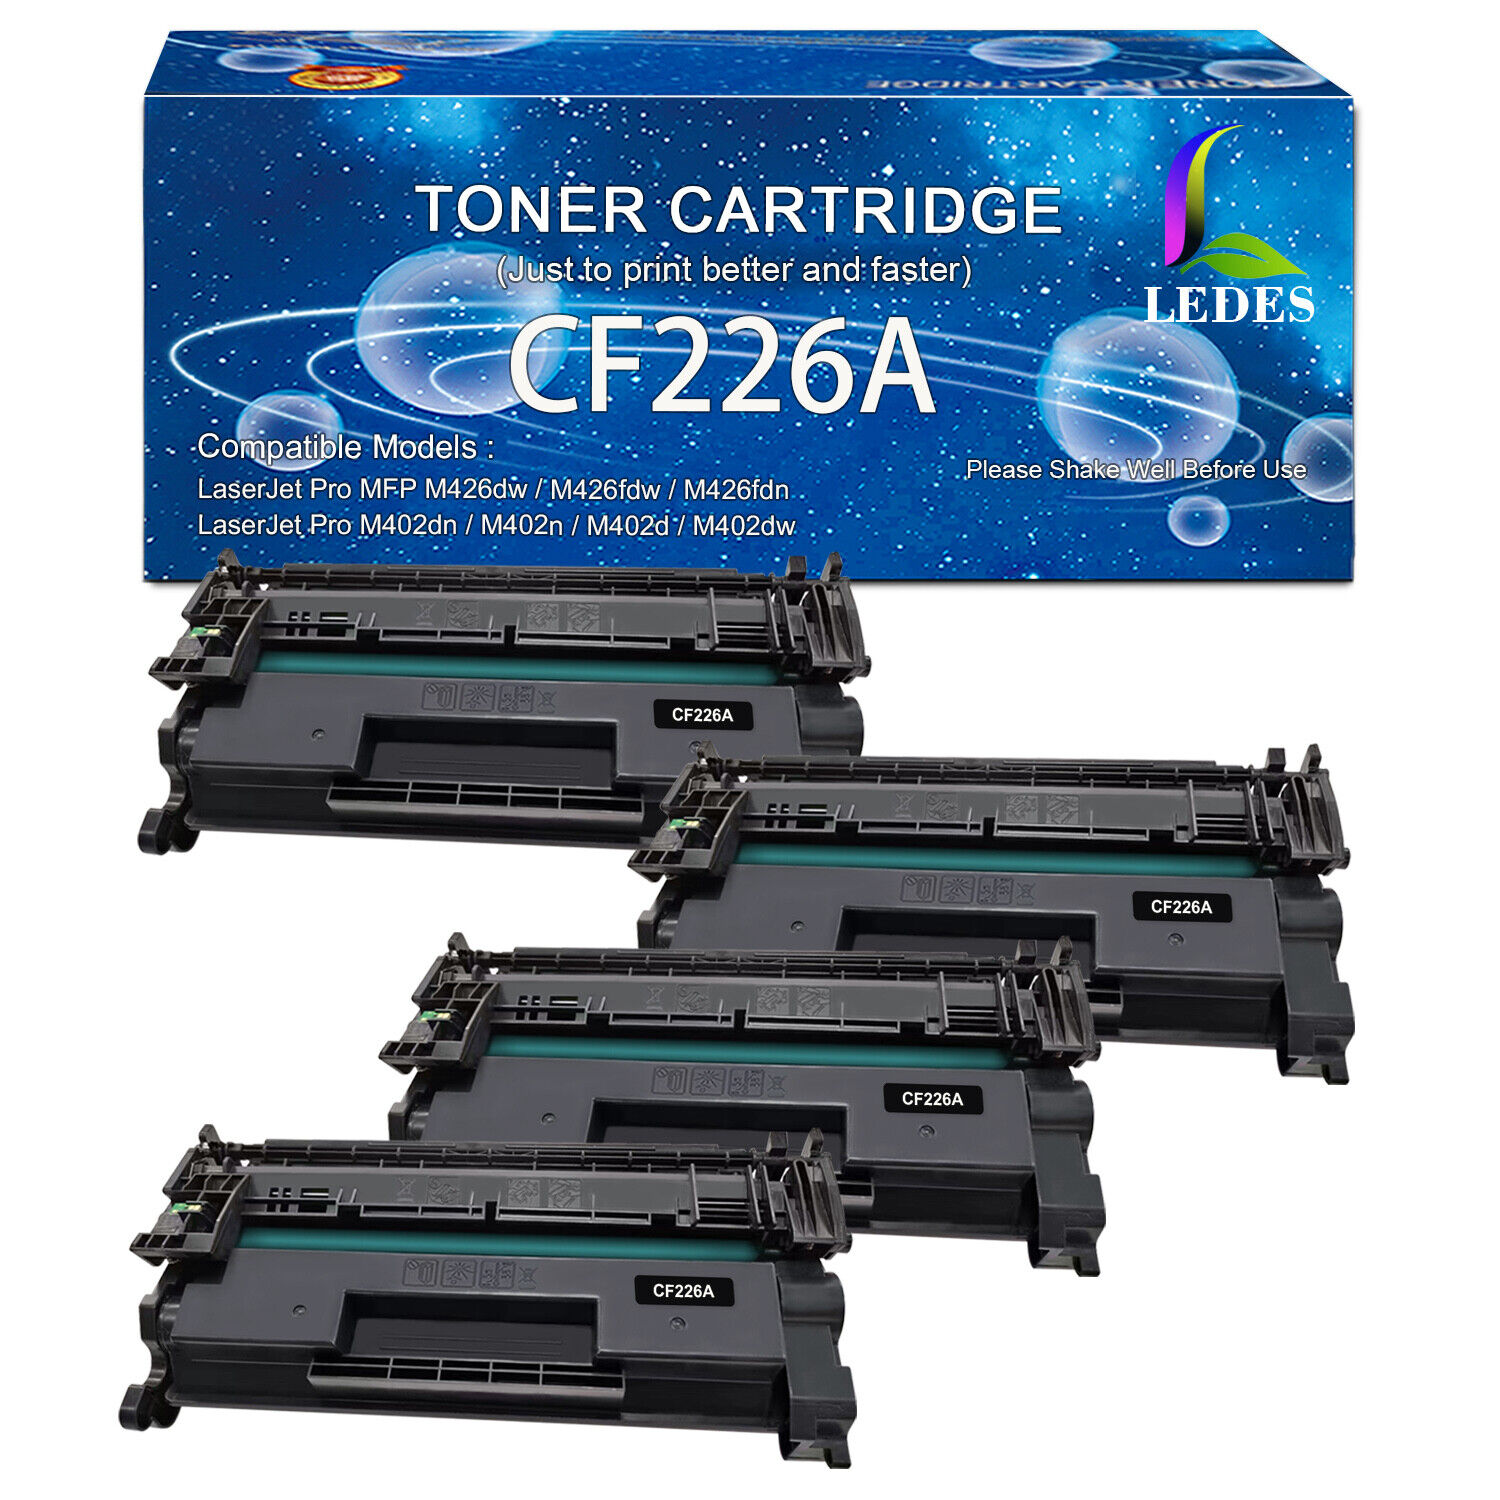 4 Black CF226A 26A High Yield Toner Cartridge for HP LaserJet Pro M402 MFP M426